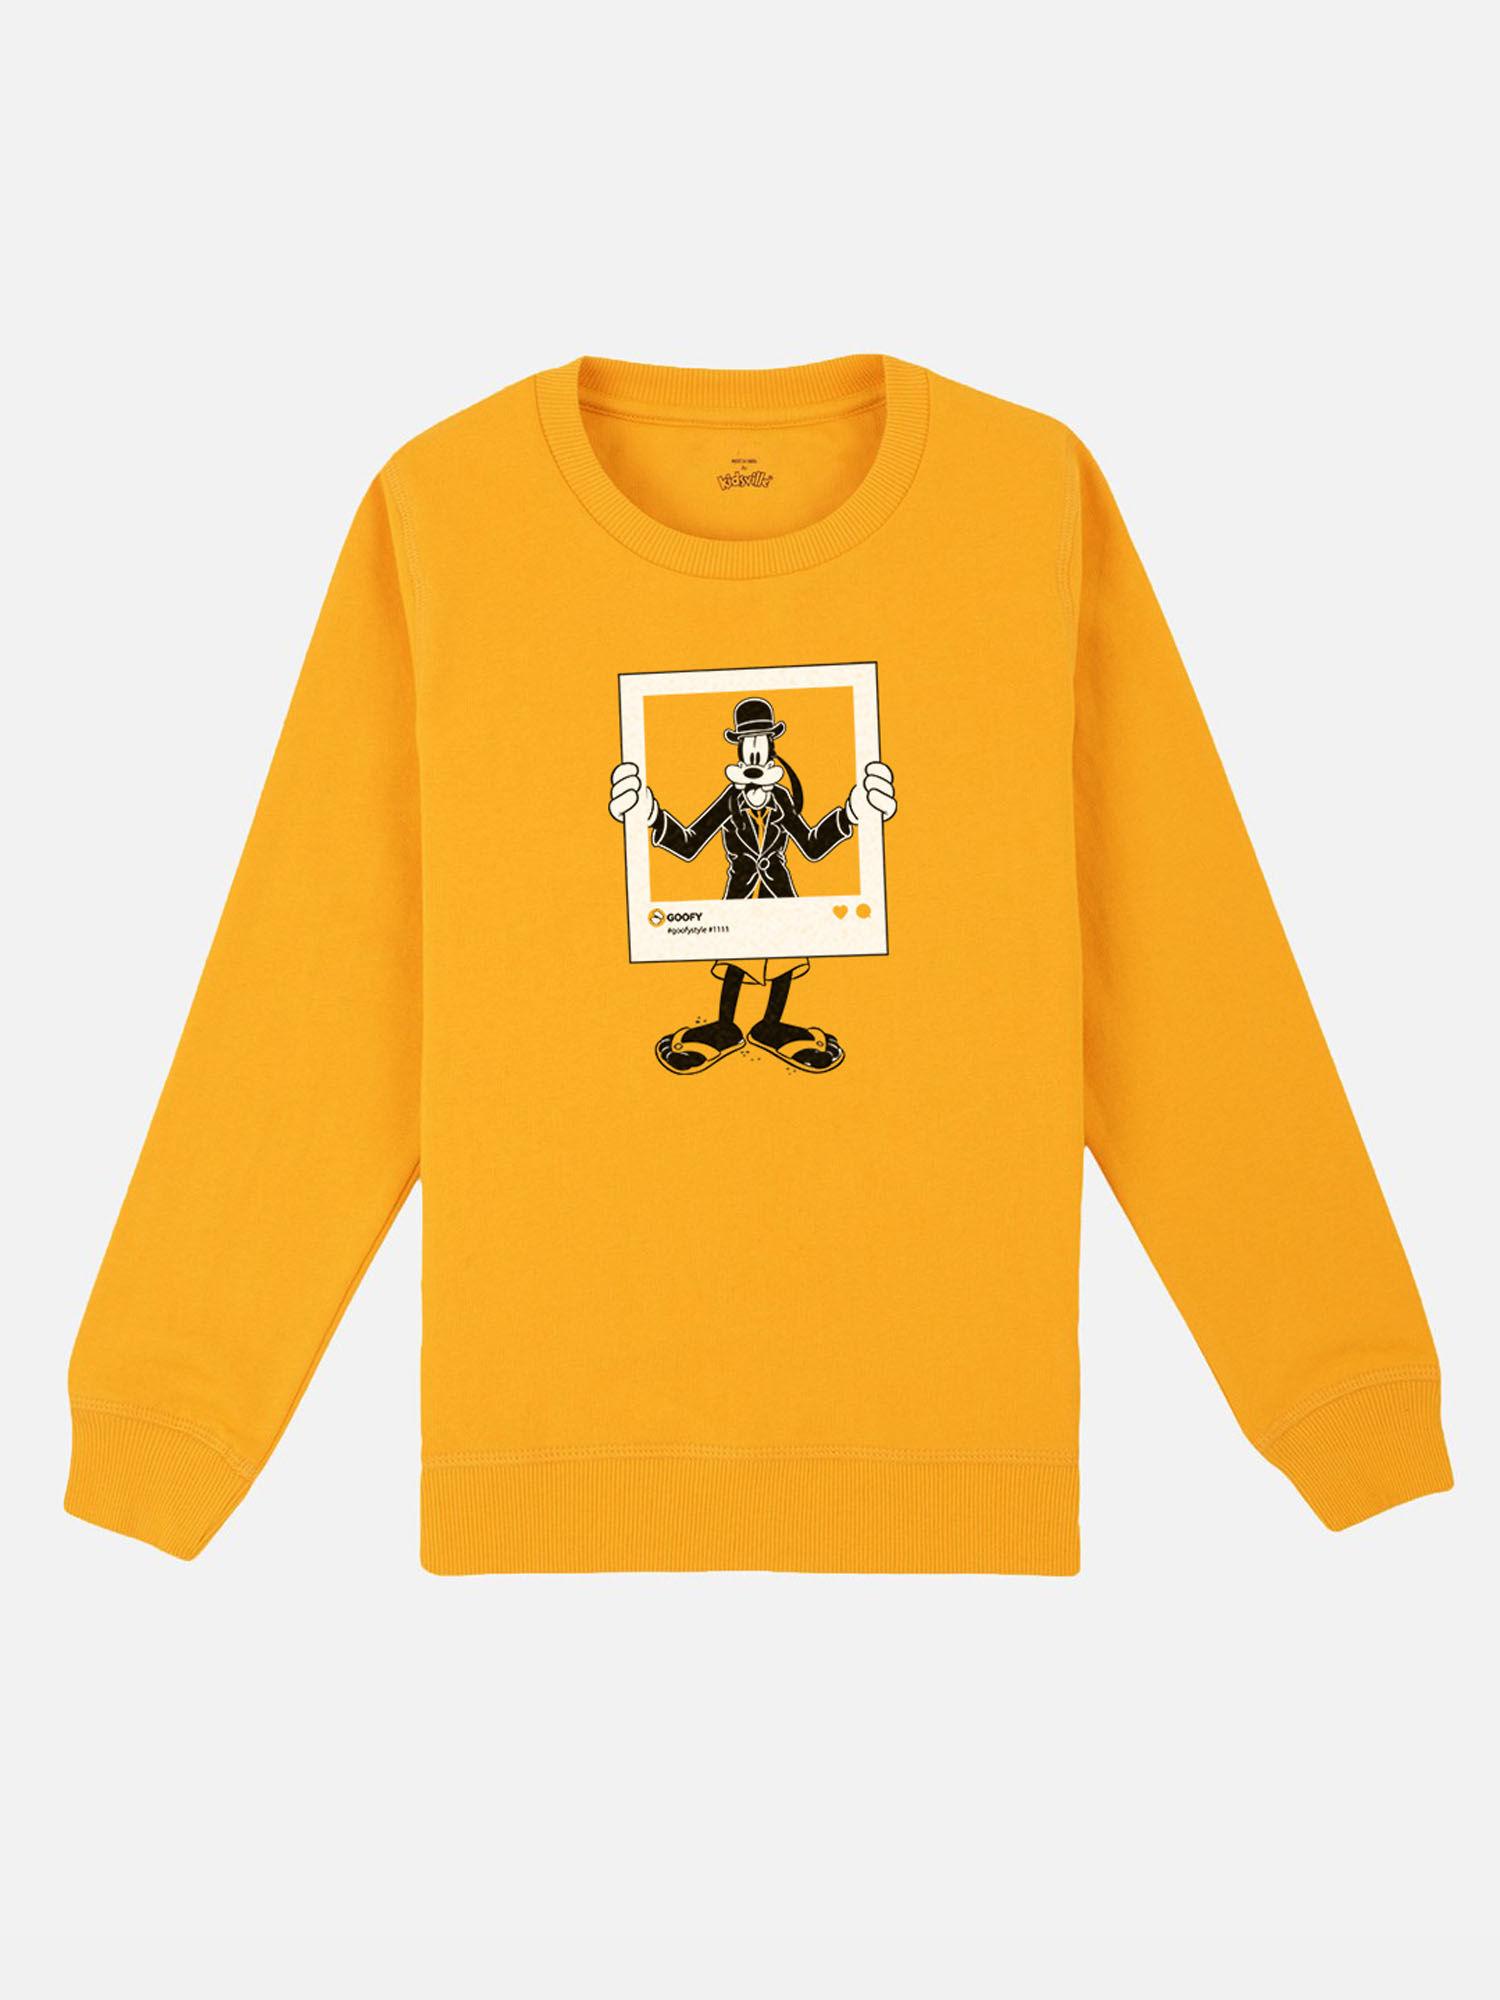 goofy printed yellow full sleeve sweater